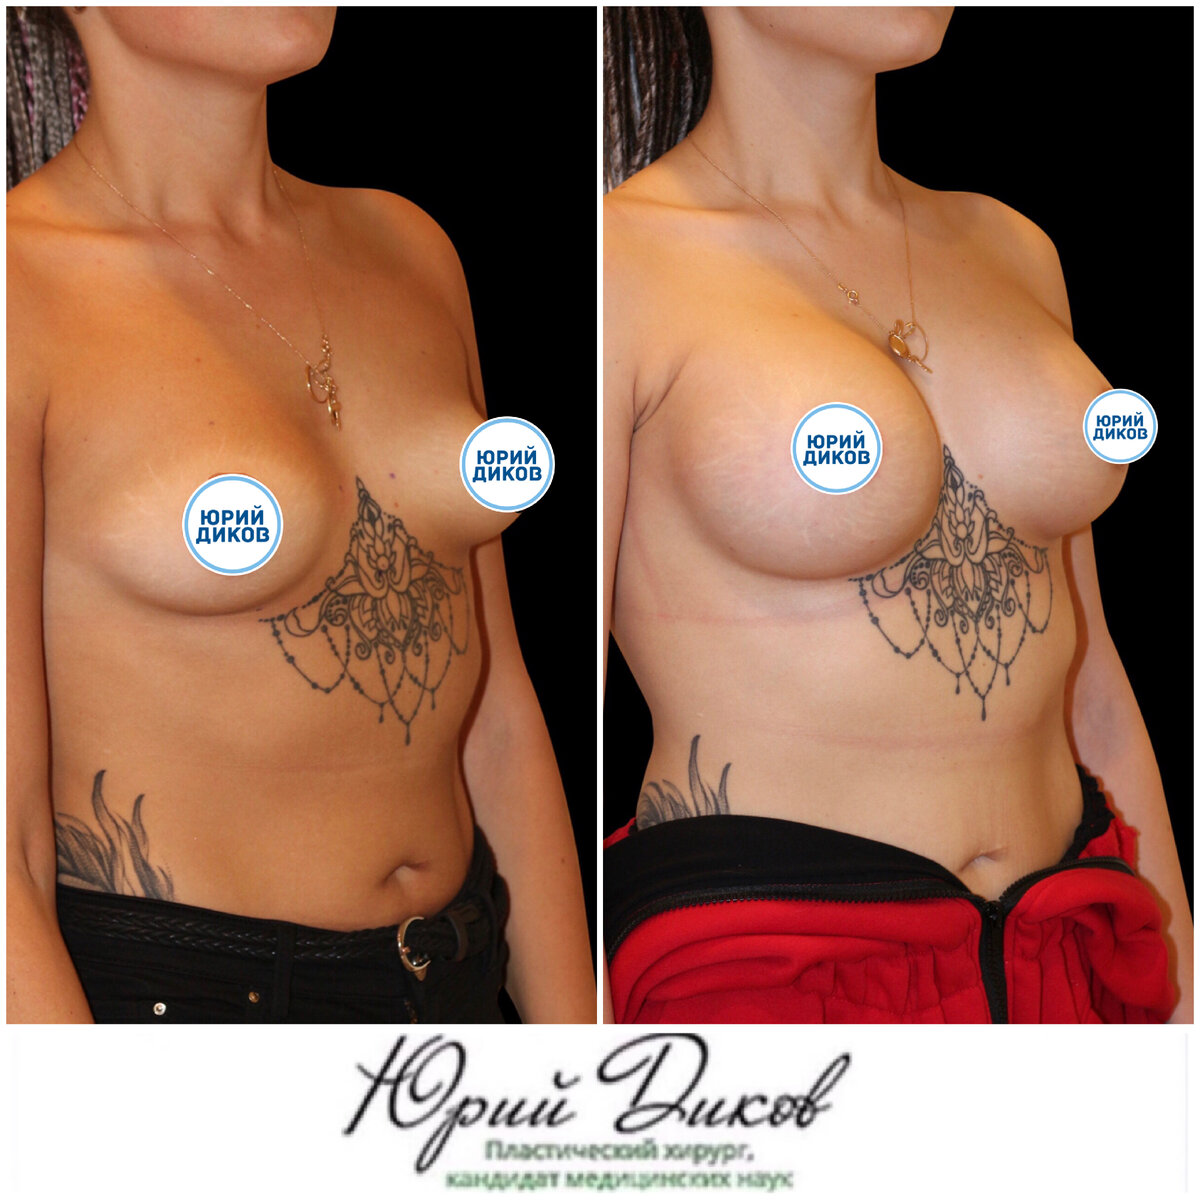 тубулярная деформация груди у женщин фото 62